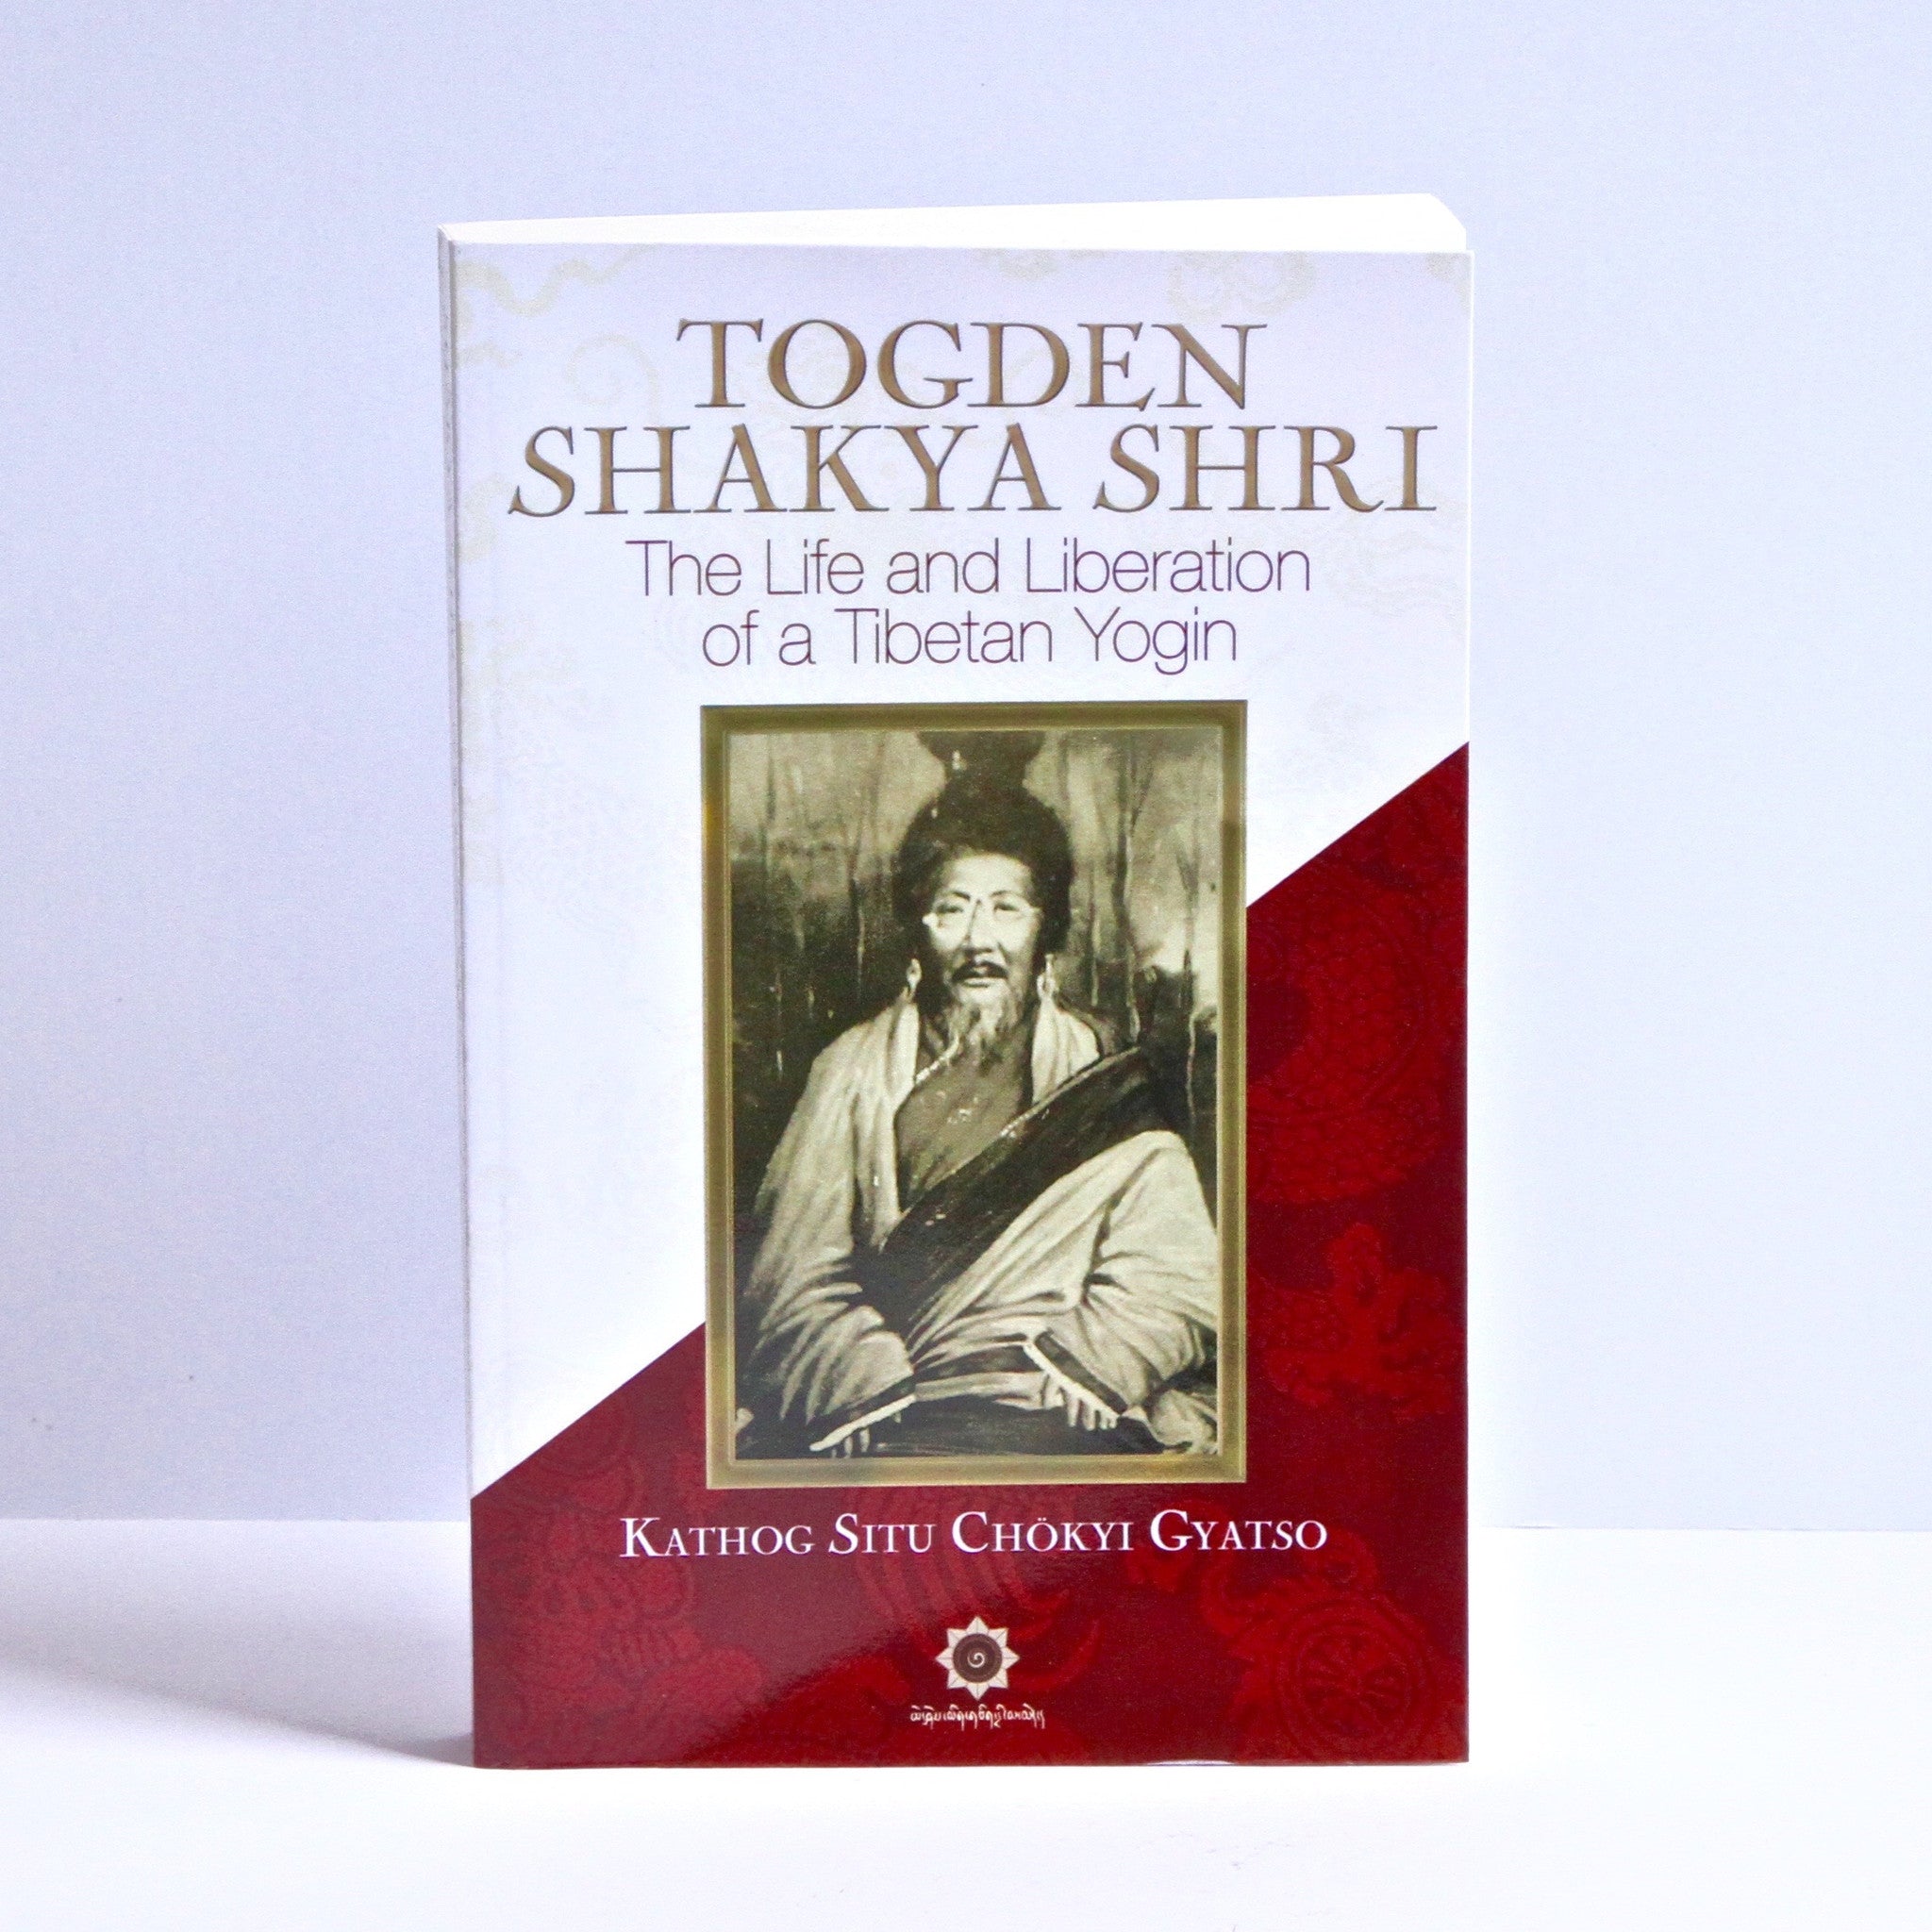 Togden Shakya Shri - The Life and Liberation of a Tibetan Yogin by Kathog Situ Chokyi Gyatso